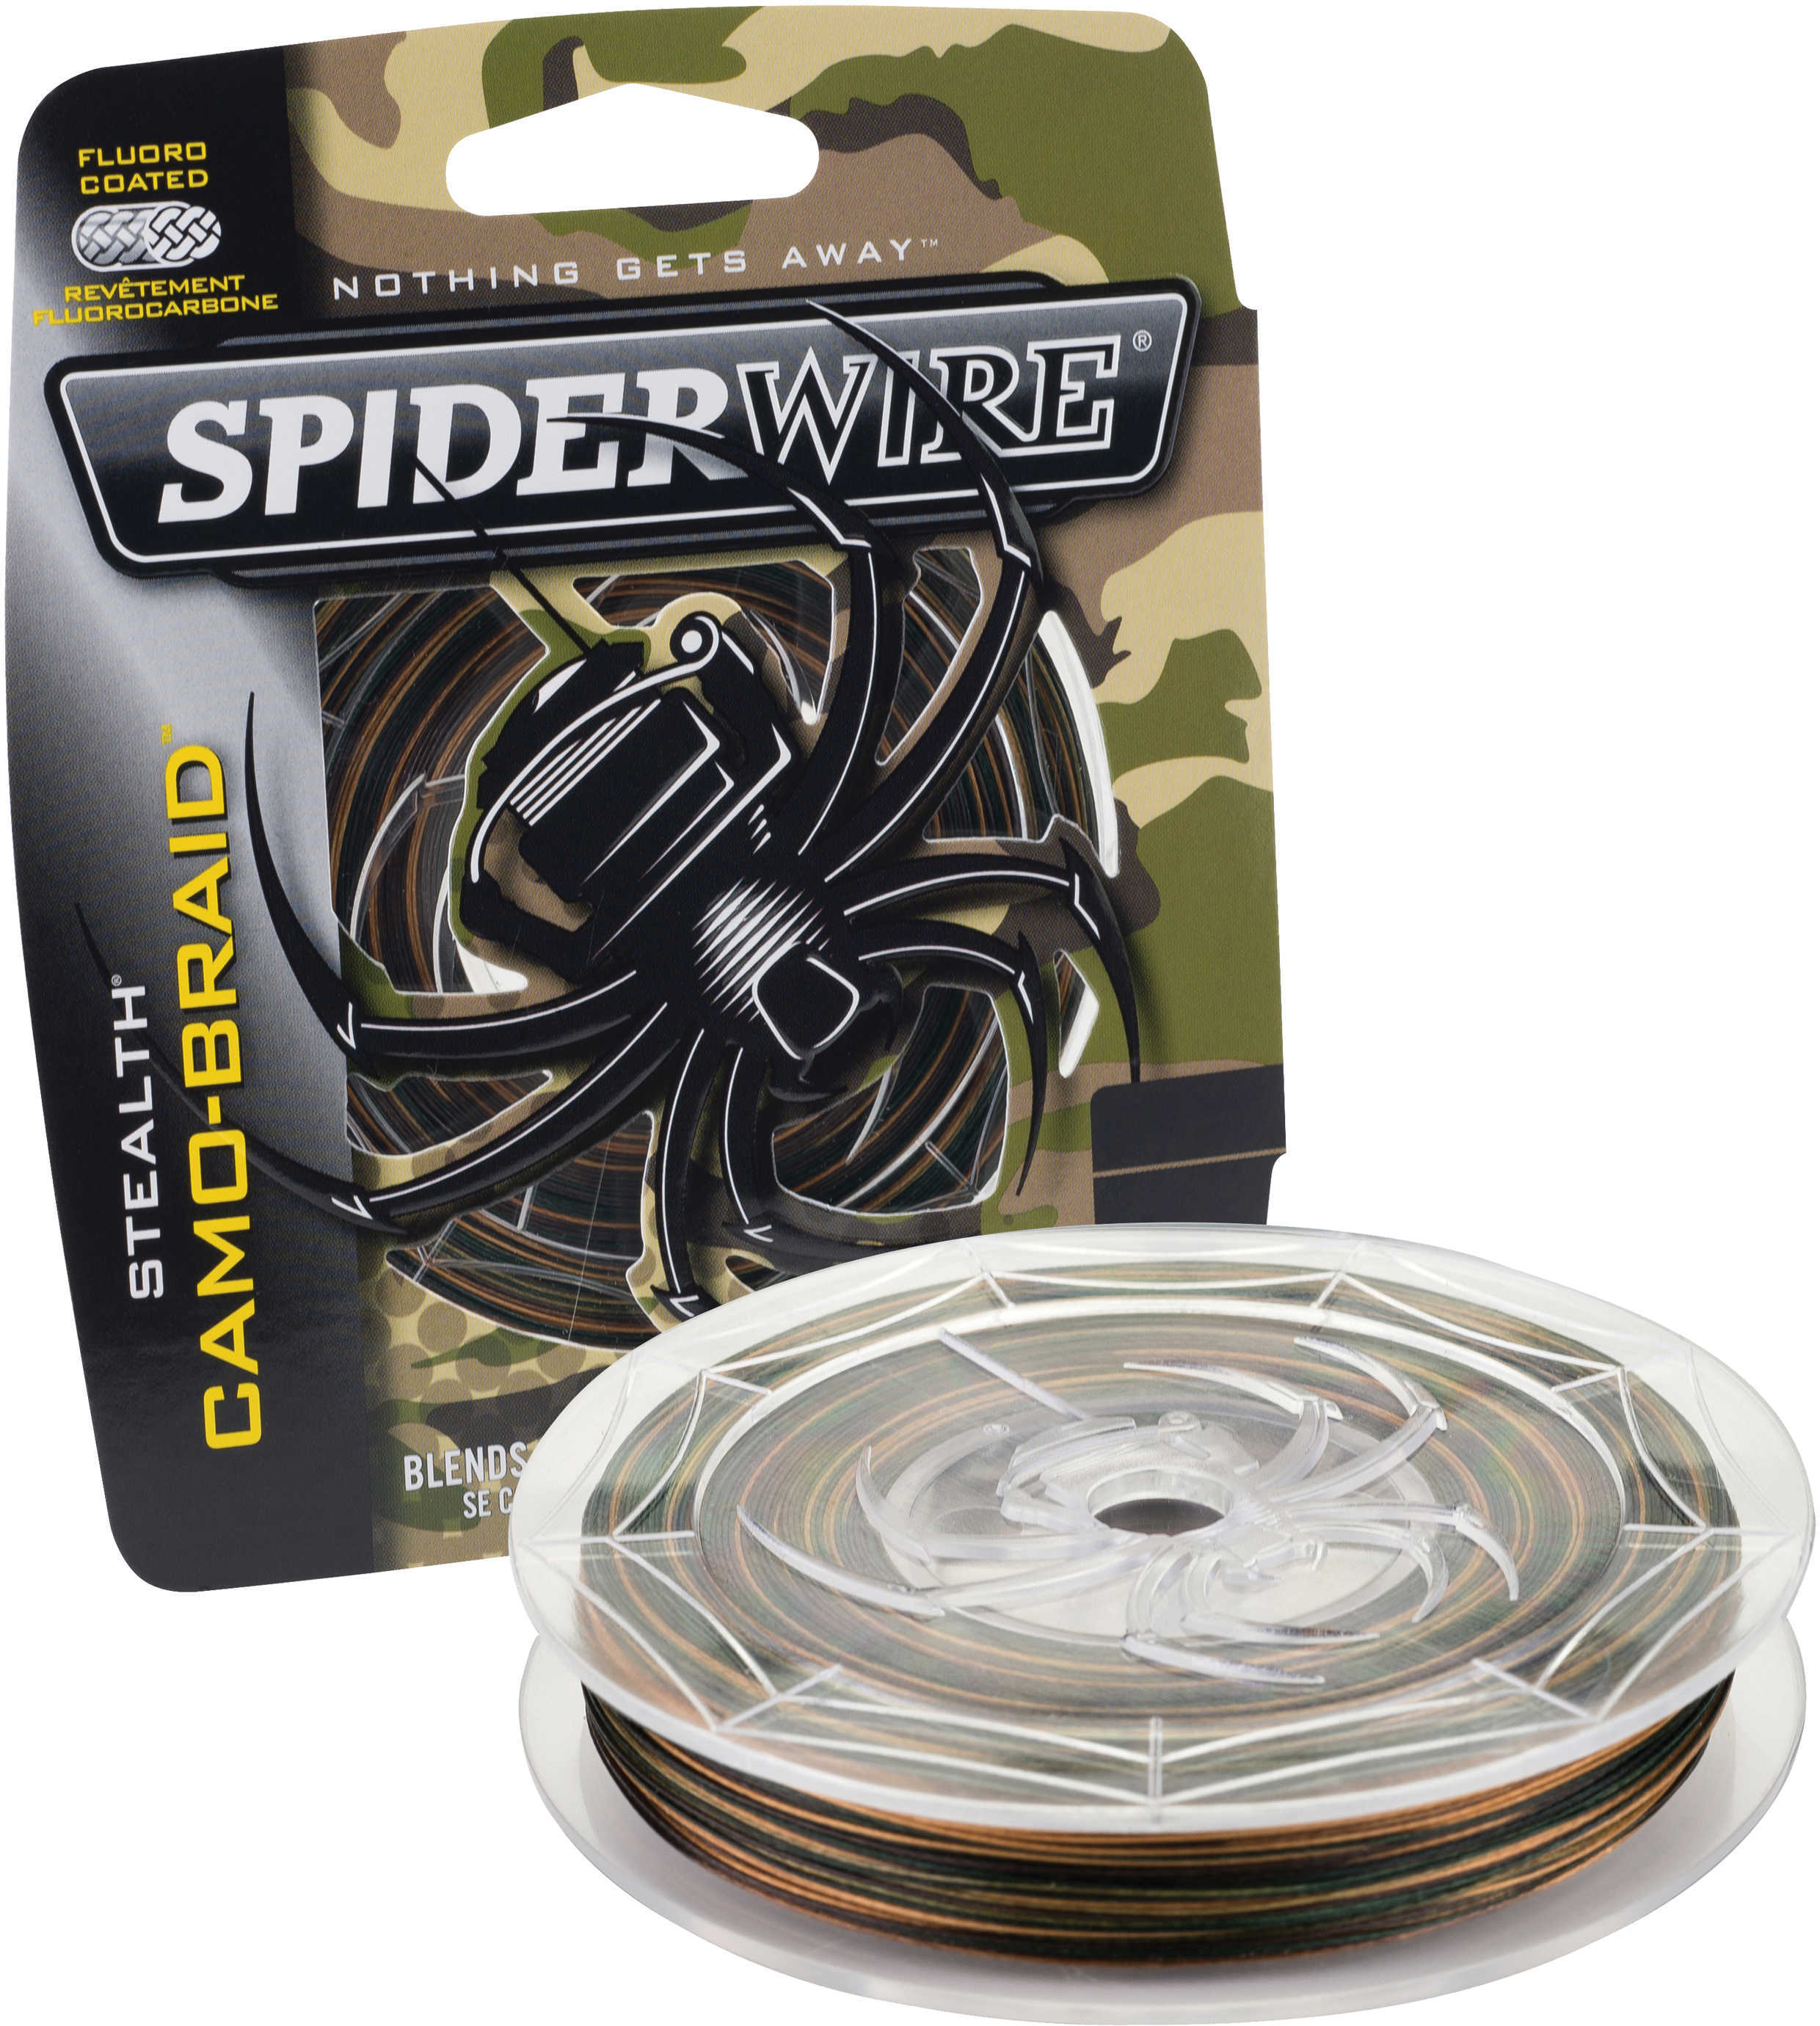 Spiderwire Stealth Braid, Camo 20 lb, 300 Yards Md: 1339795